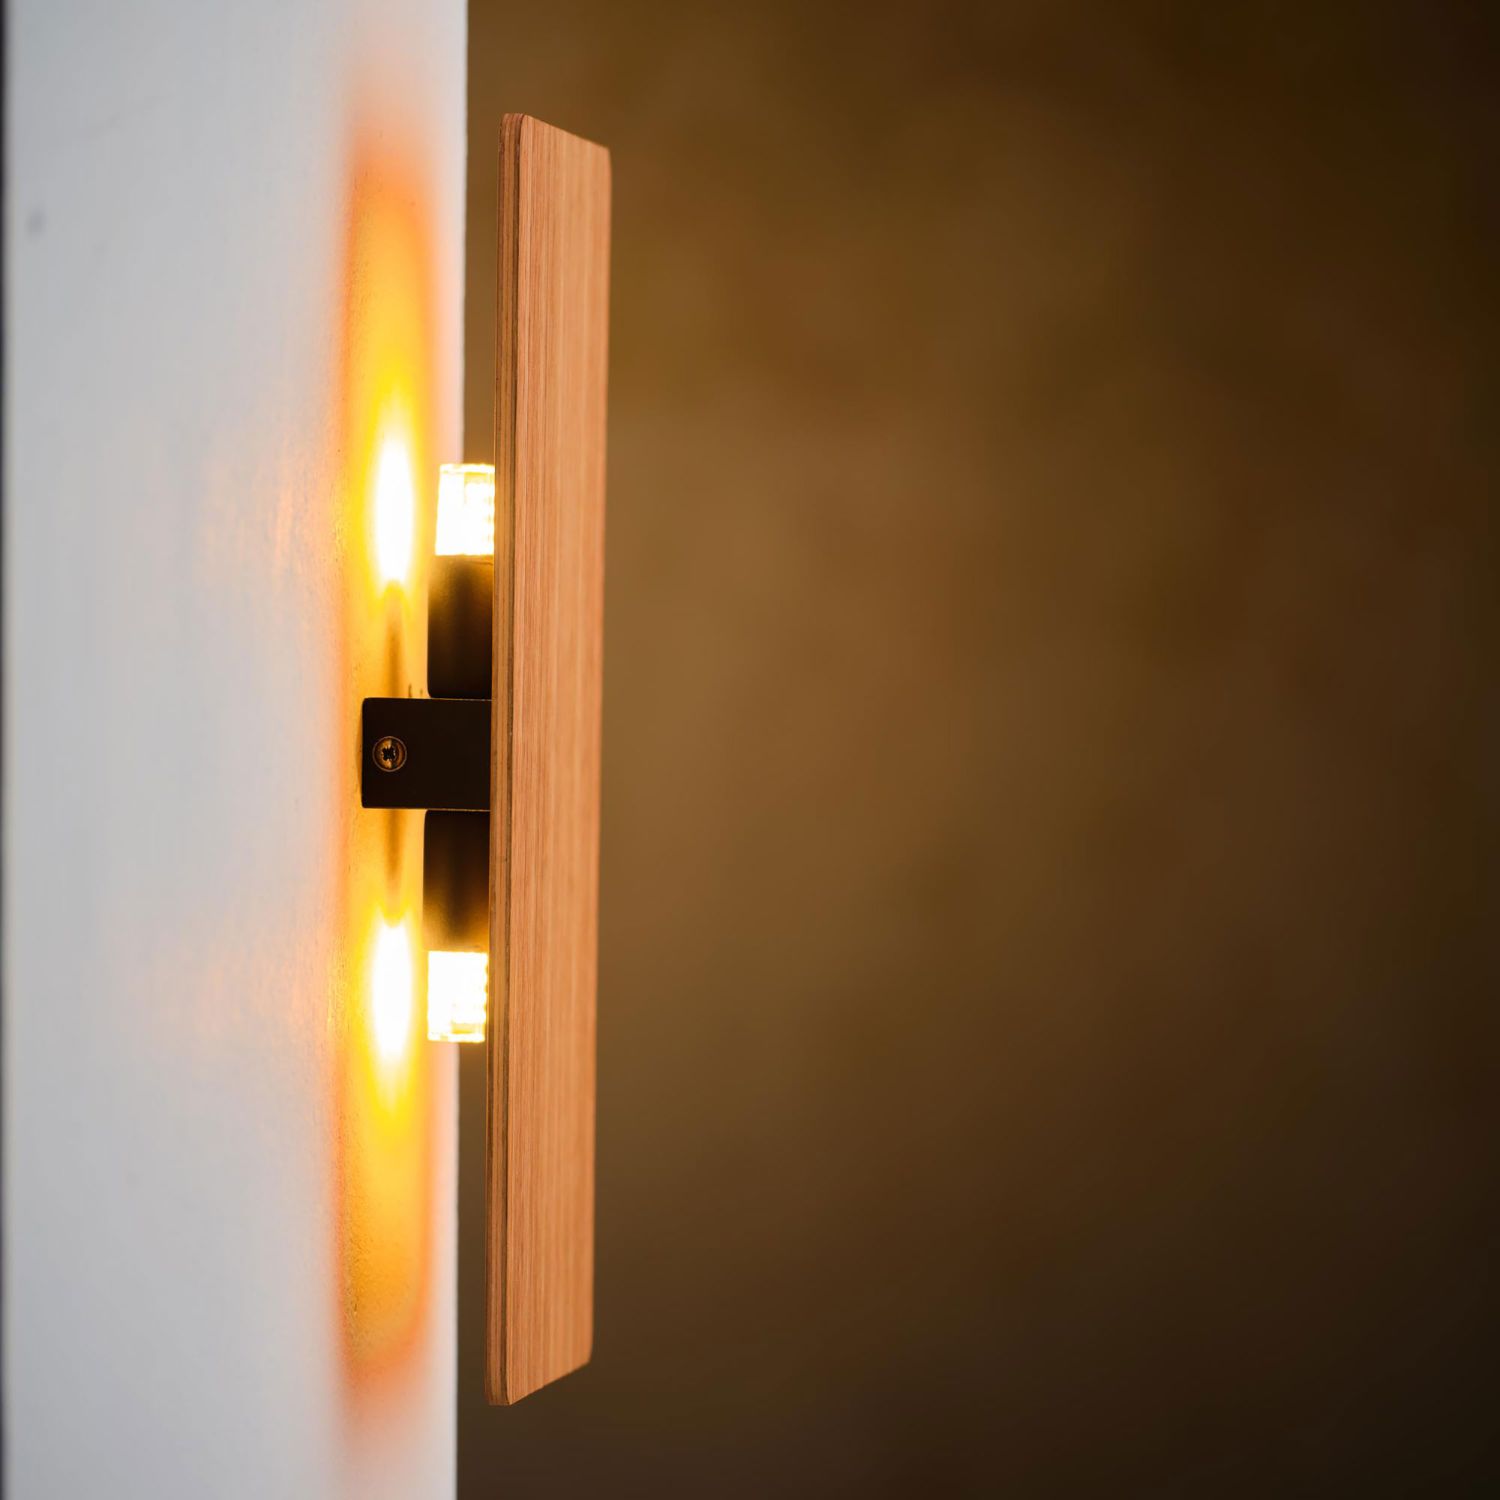 Wandlampe Holz eckig 35 cm flach Modern indirektes Licht